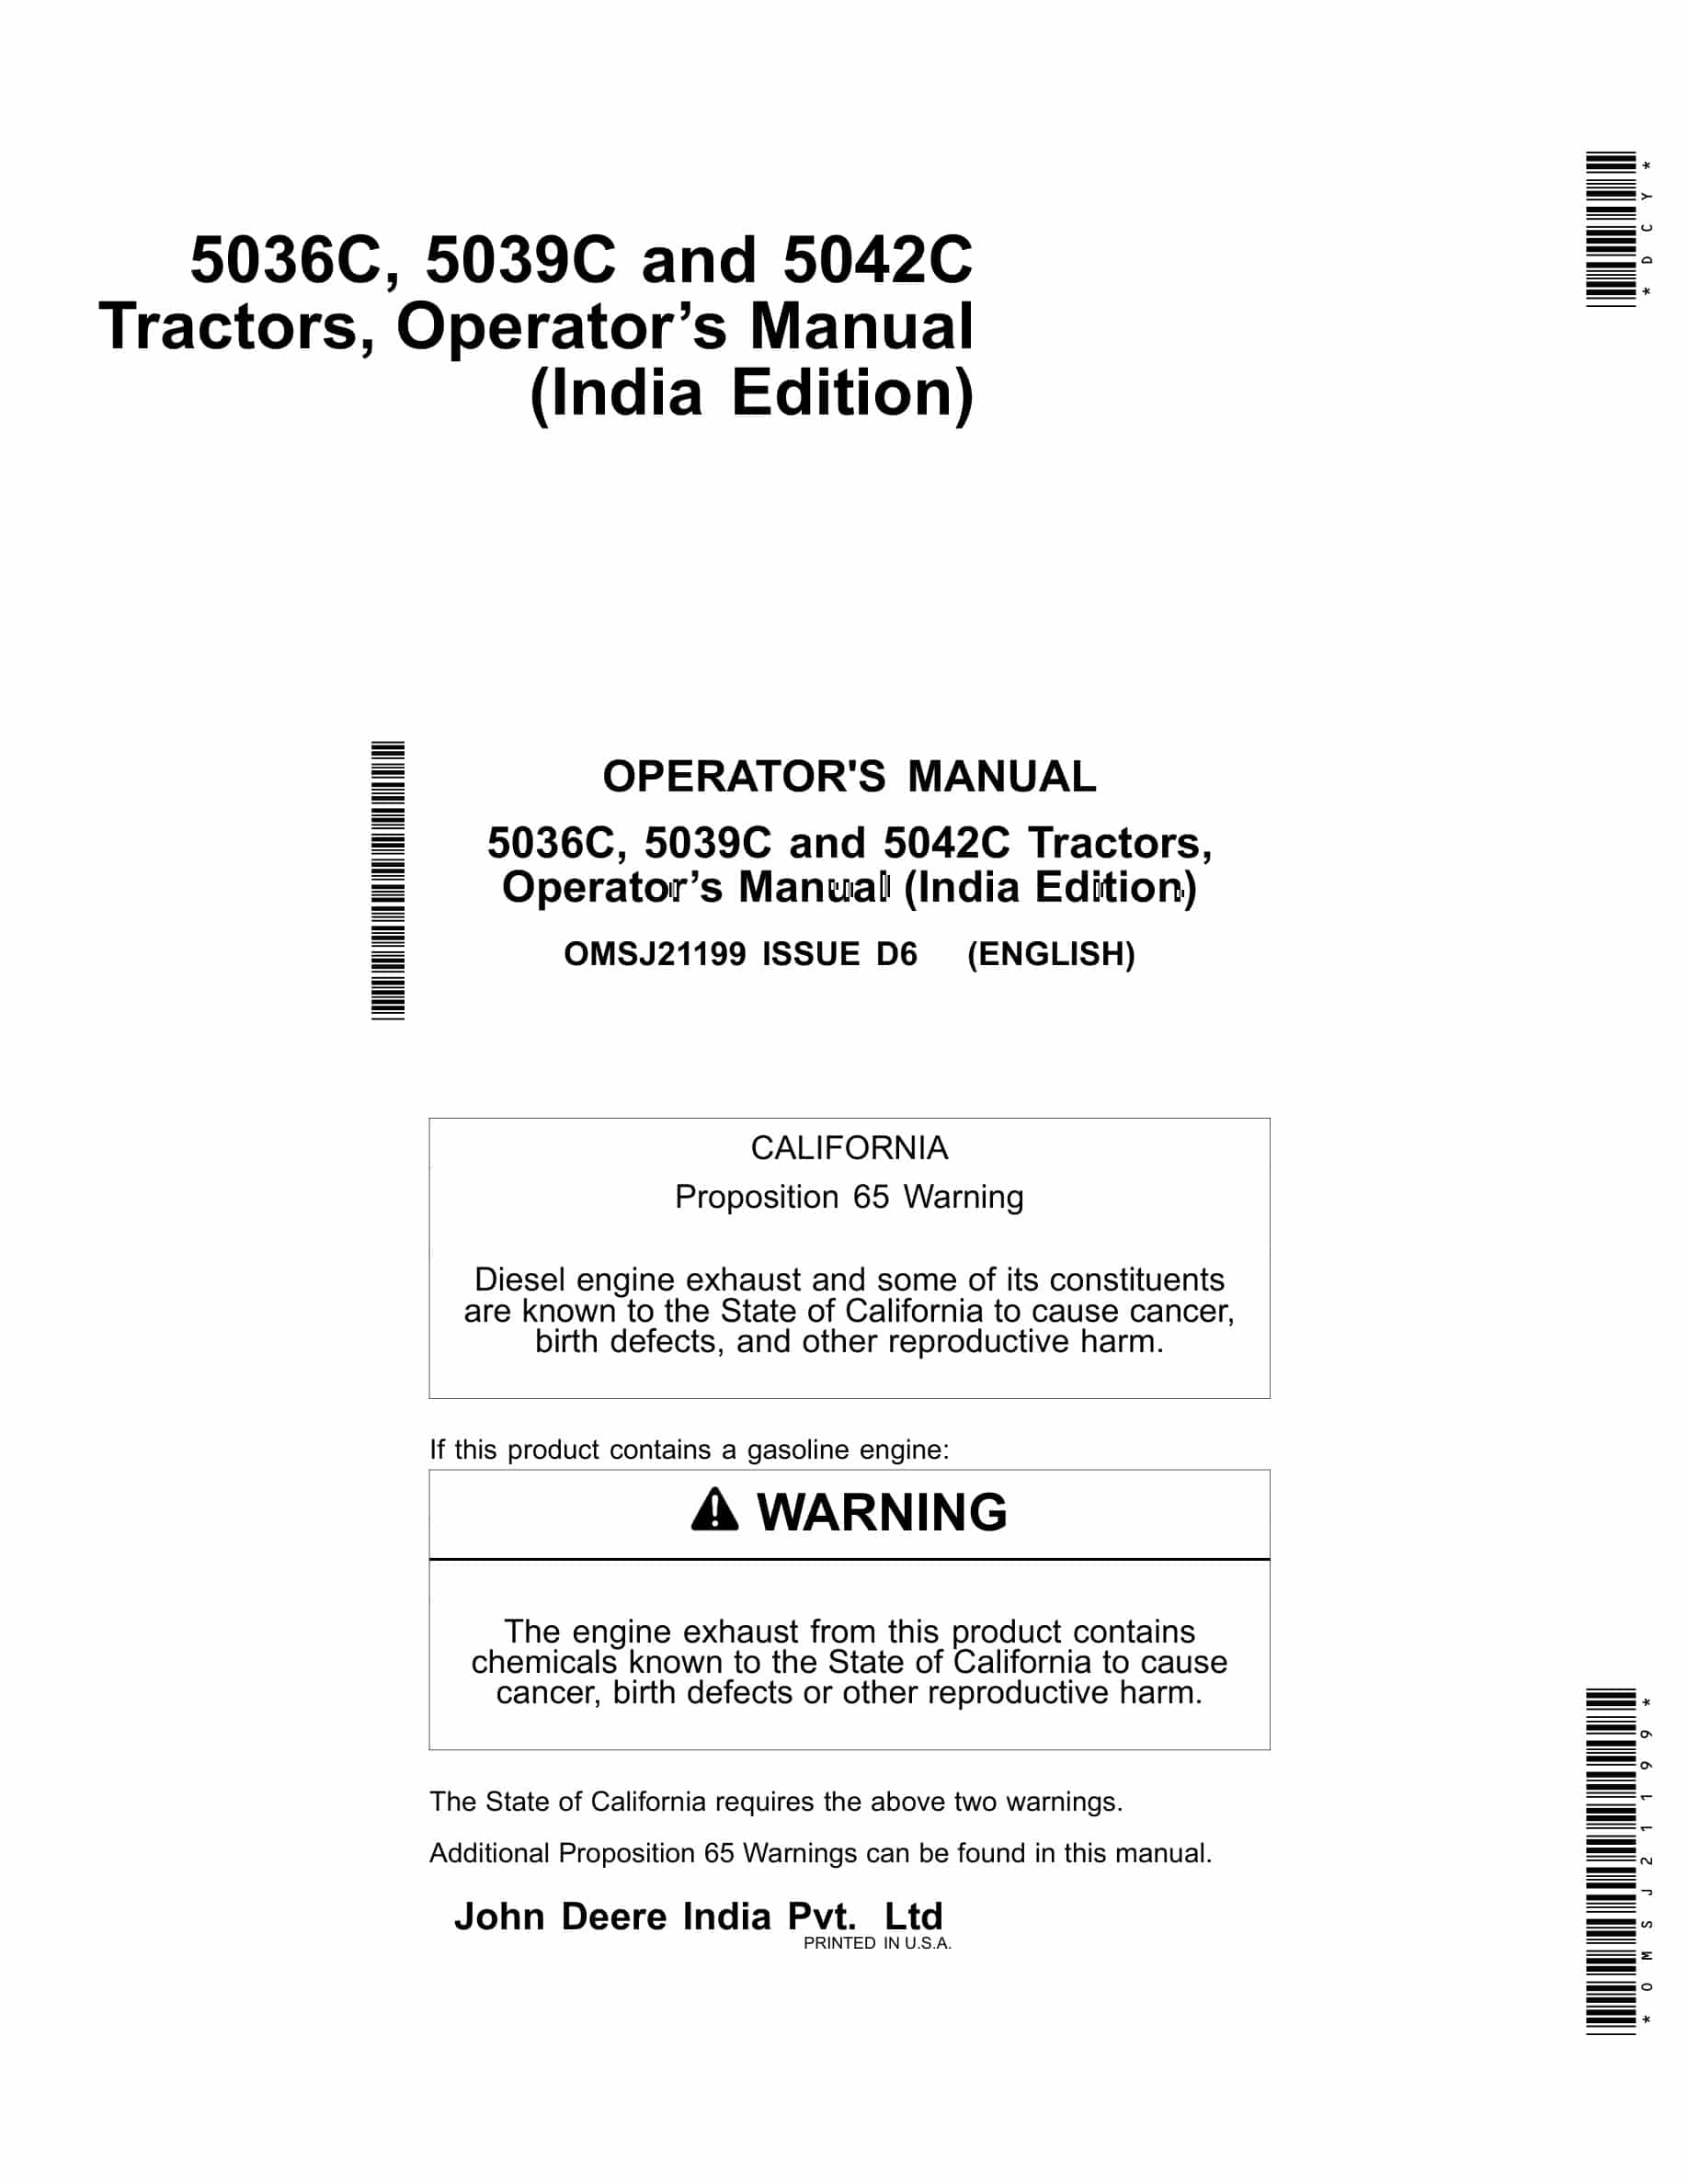 John Deere 5036c, 5039c And 5042c Tractors Operator Manuals OMSJ21199-1